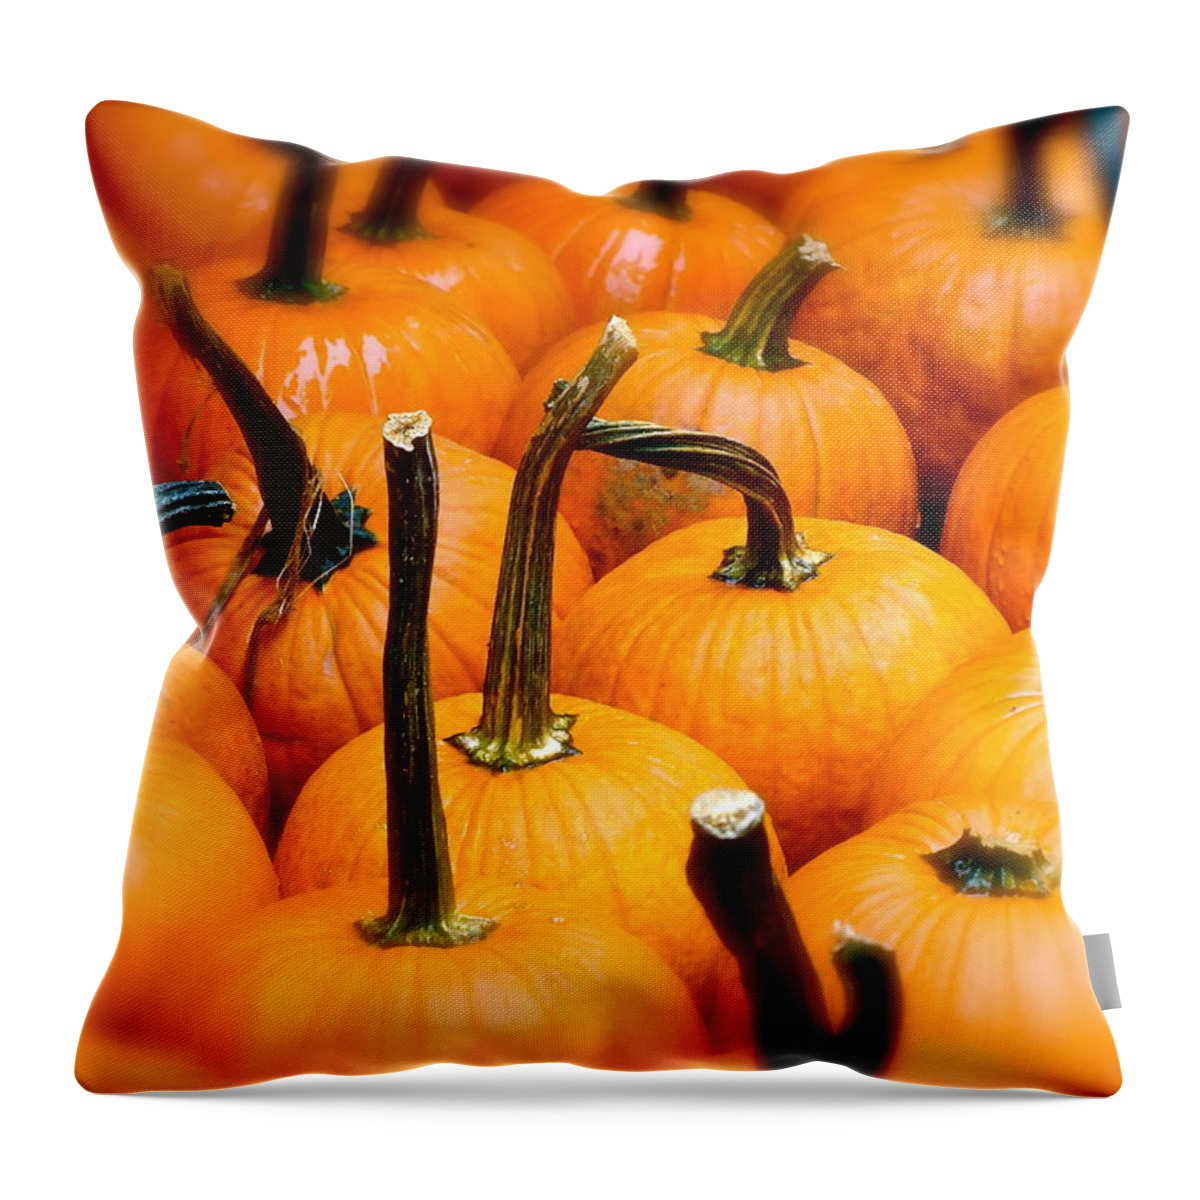 Pumpkins Throw Pillow featuring the photograph Rainy Day Pumpkins by Ira Shander